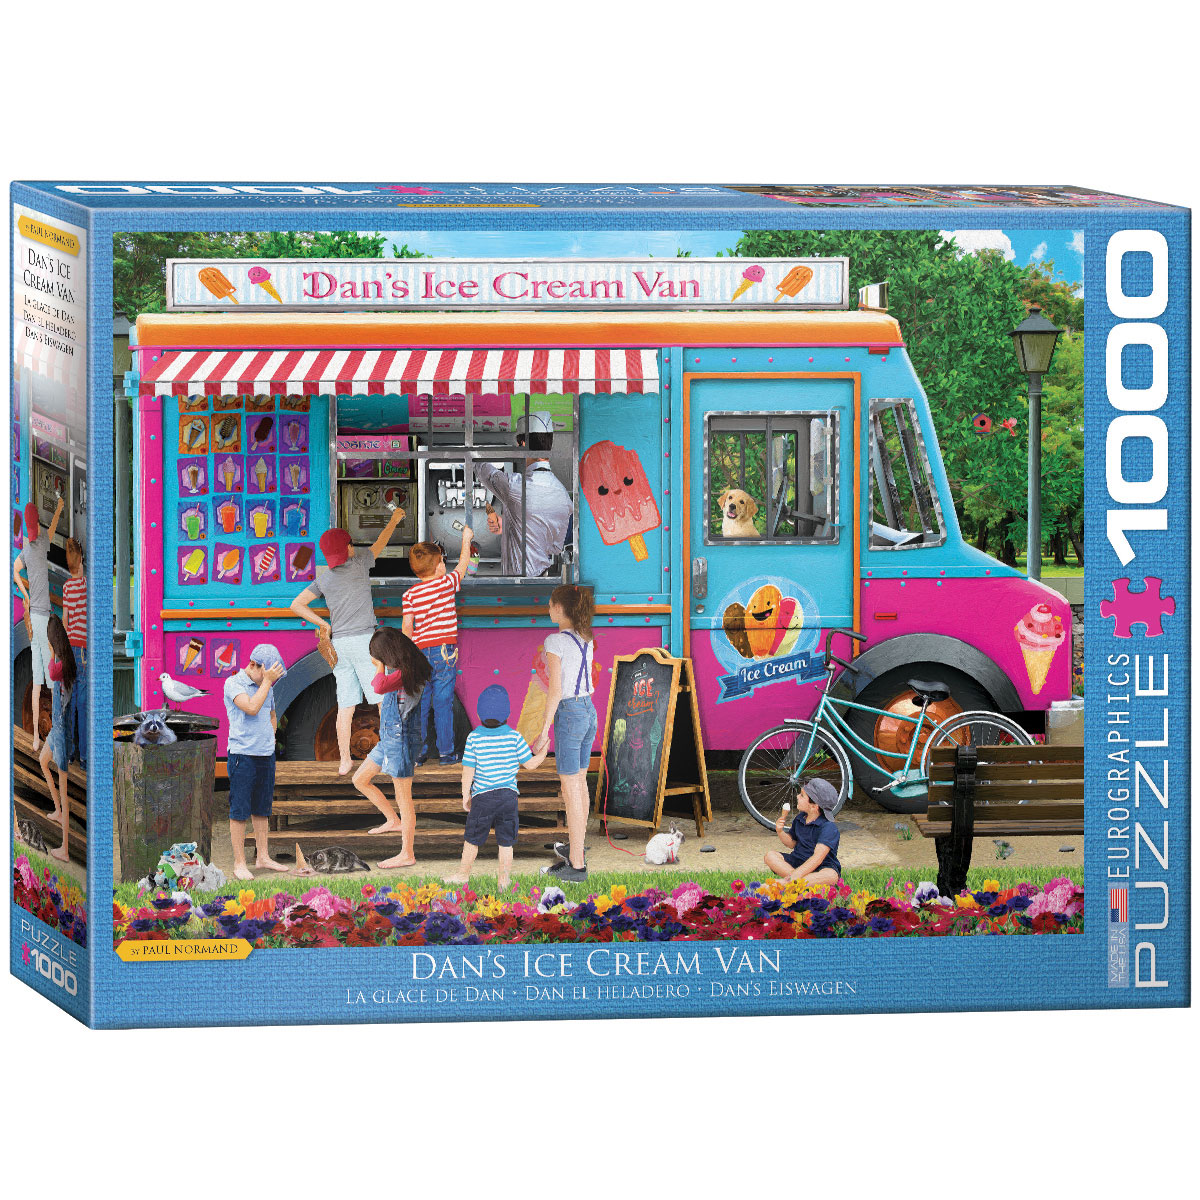 Dans Ice Cream Van by Normand - 1000pc puzzle